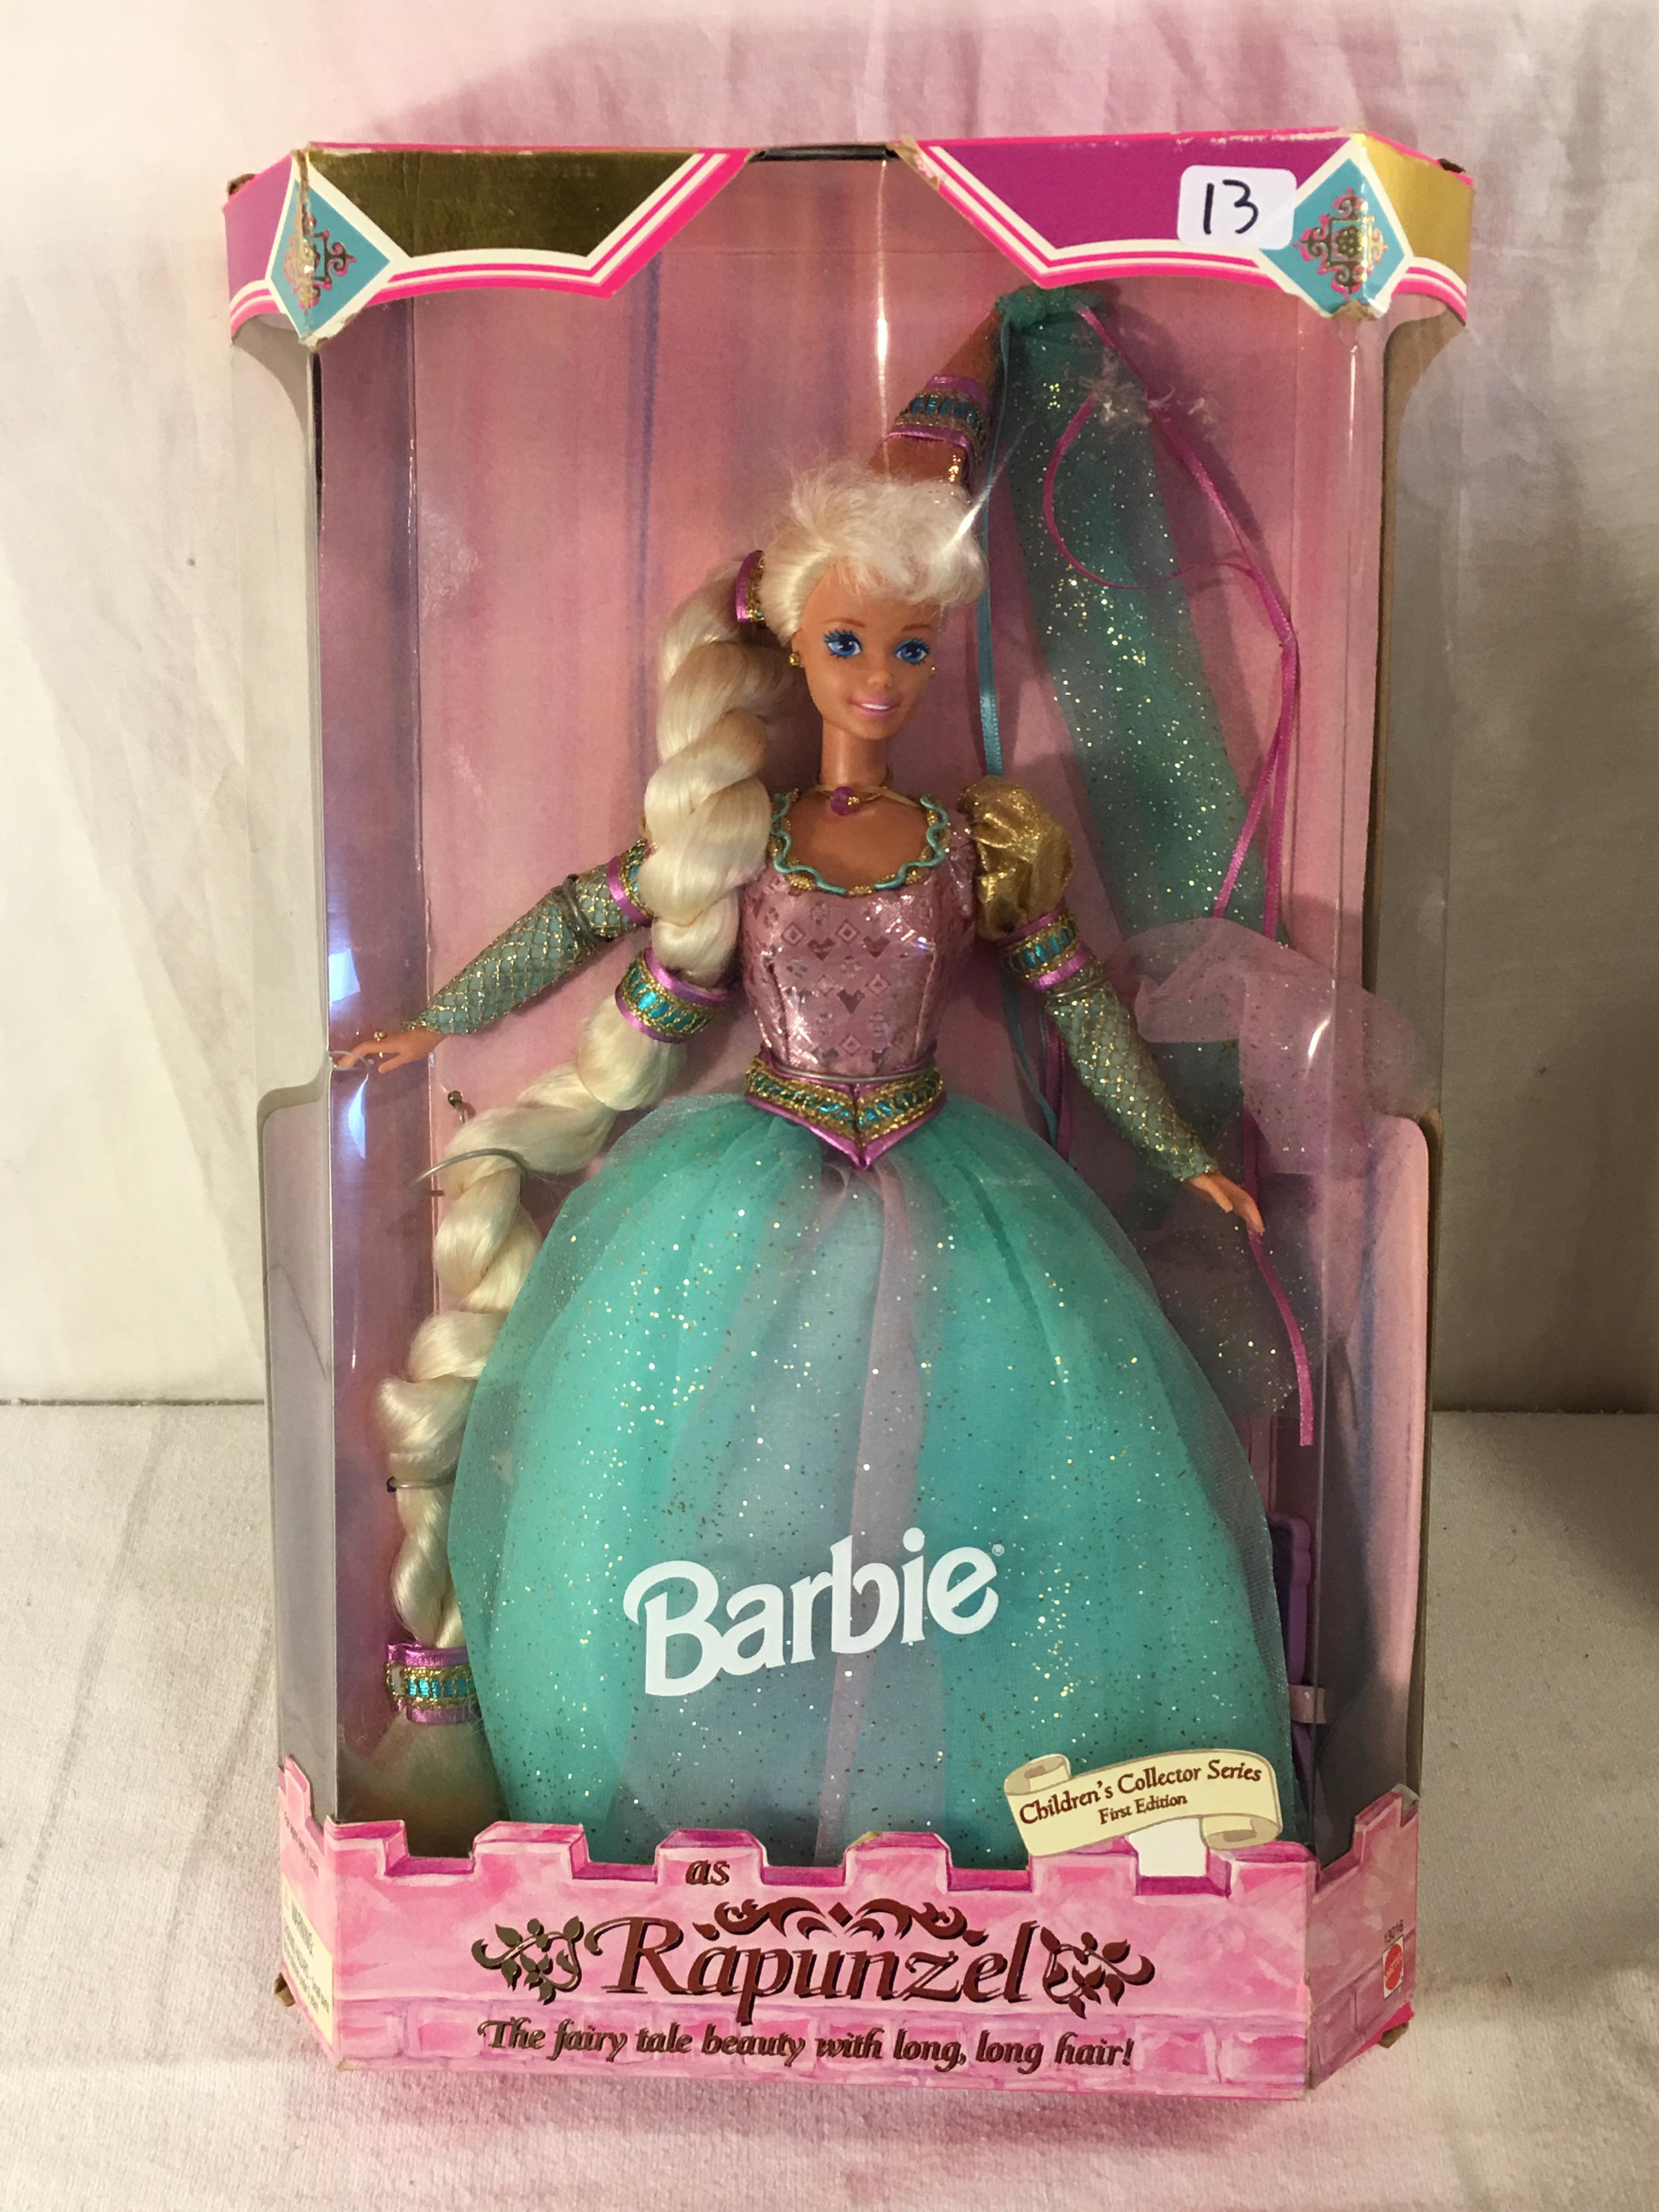 NIB Collector Children's Collector Series Barbie as Rapunzel Barbie Doll Box: 13.5"x9"